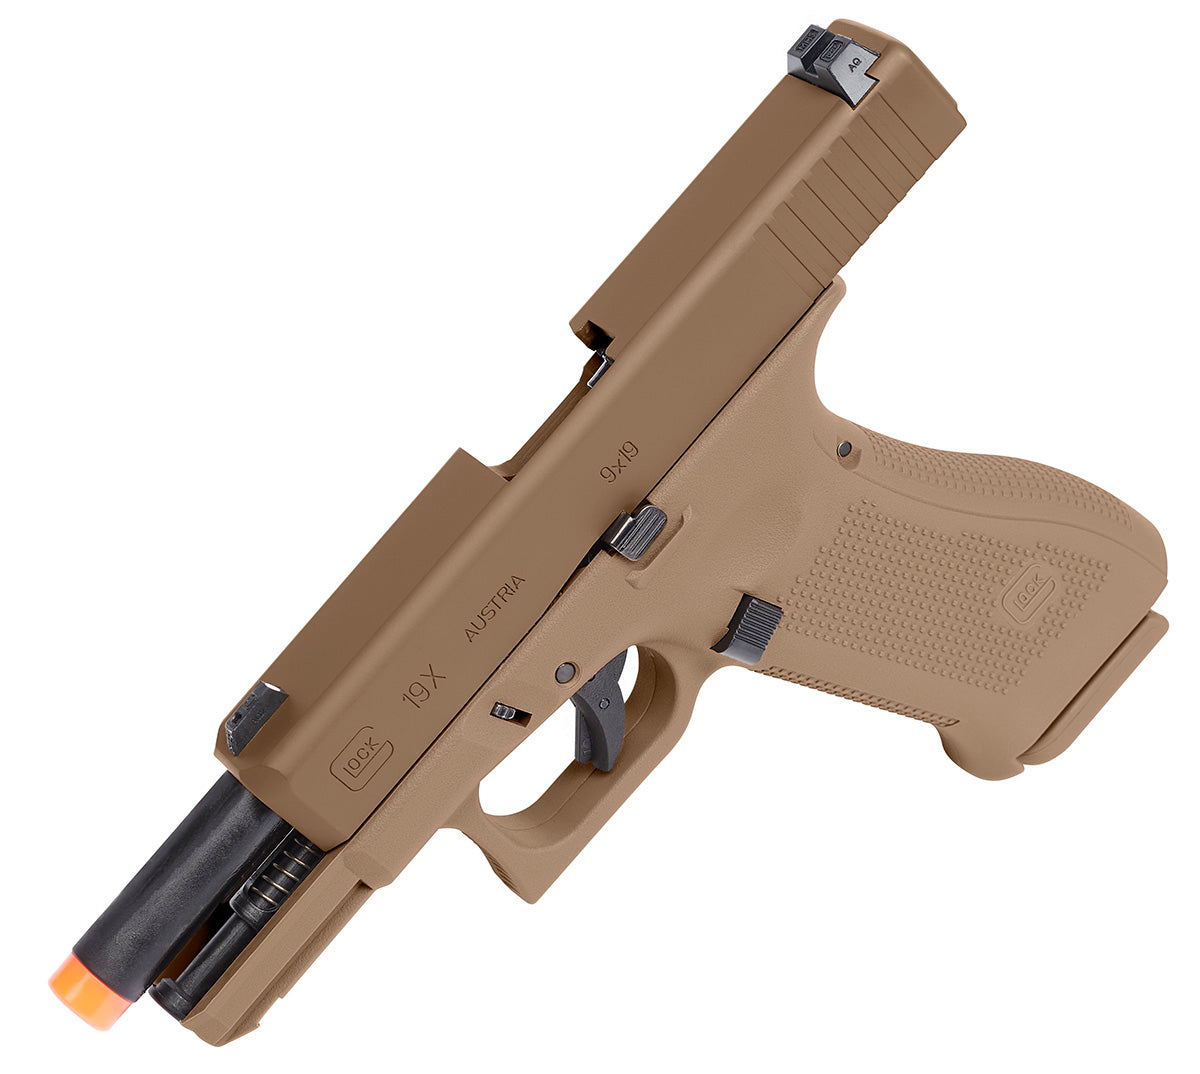 GLOCK Glock G19X GBB Airsoft Pistol - 6mm, Coyote Tan, 23 Round Mag